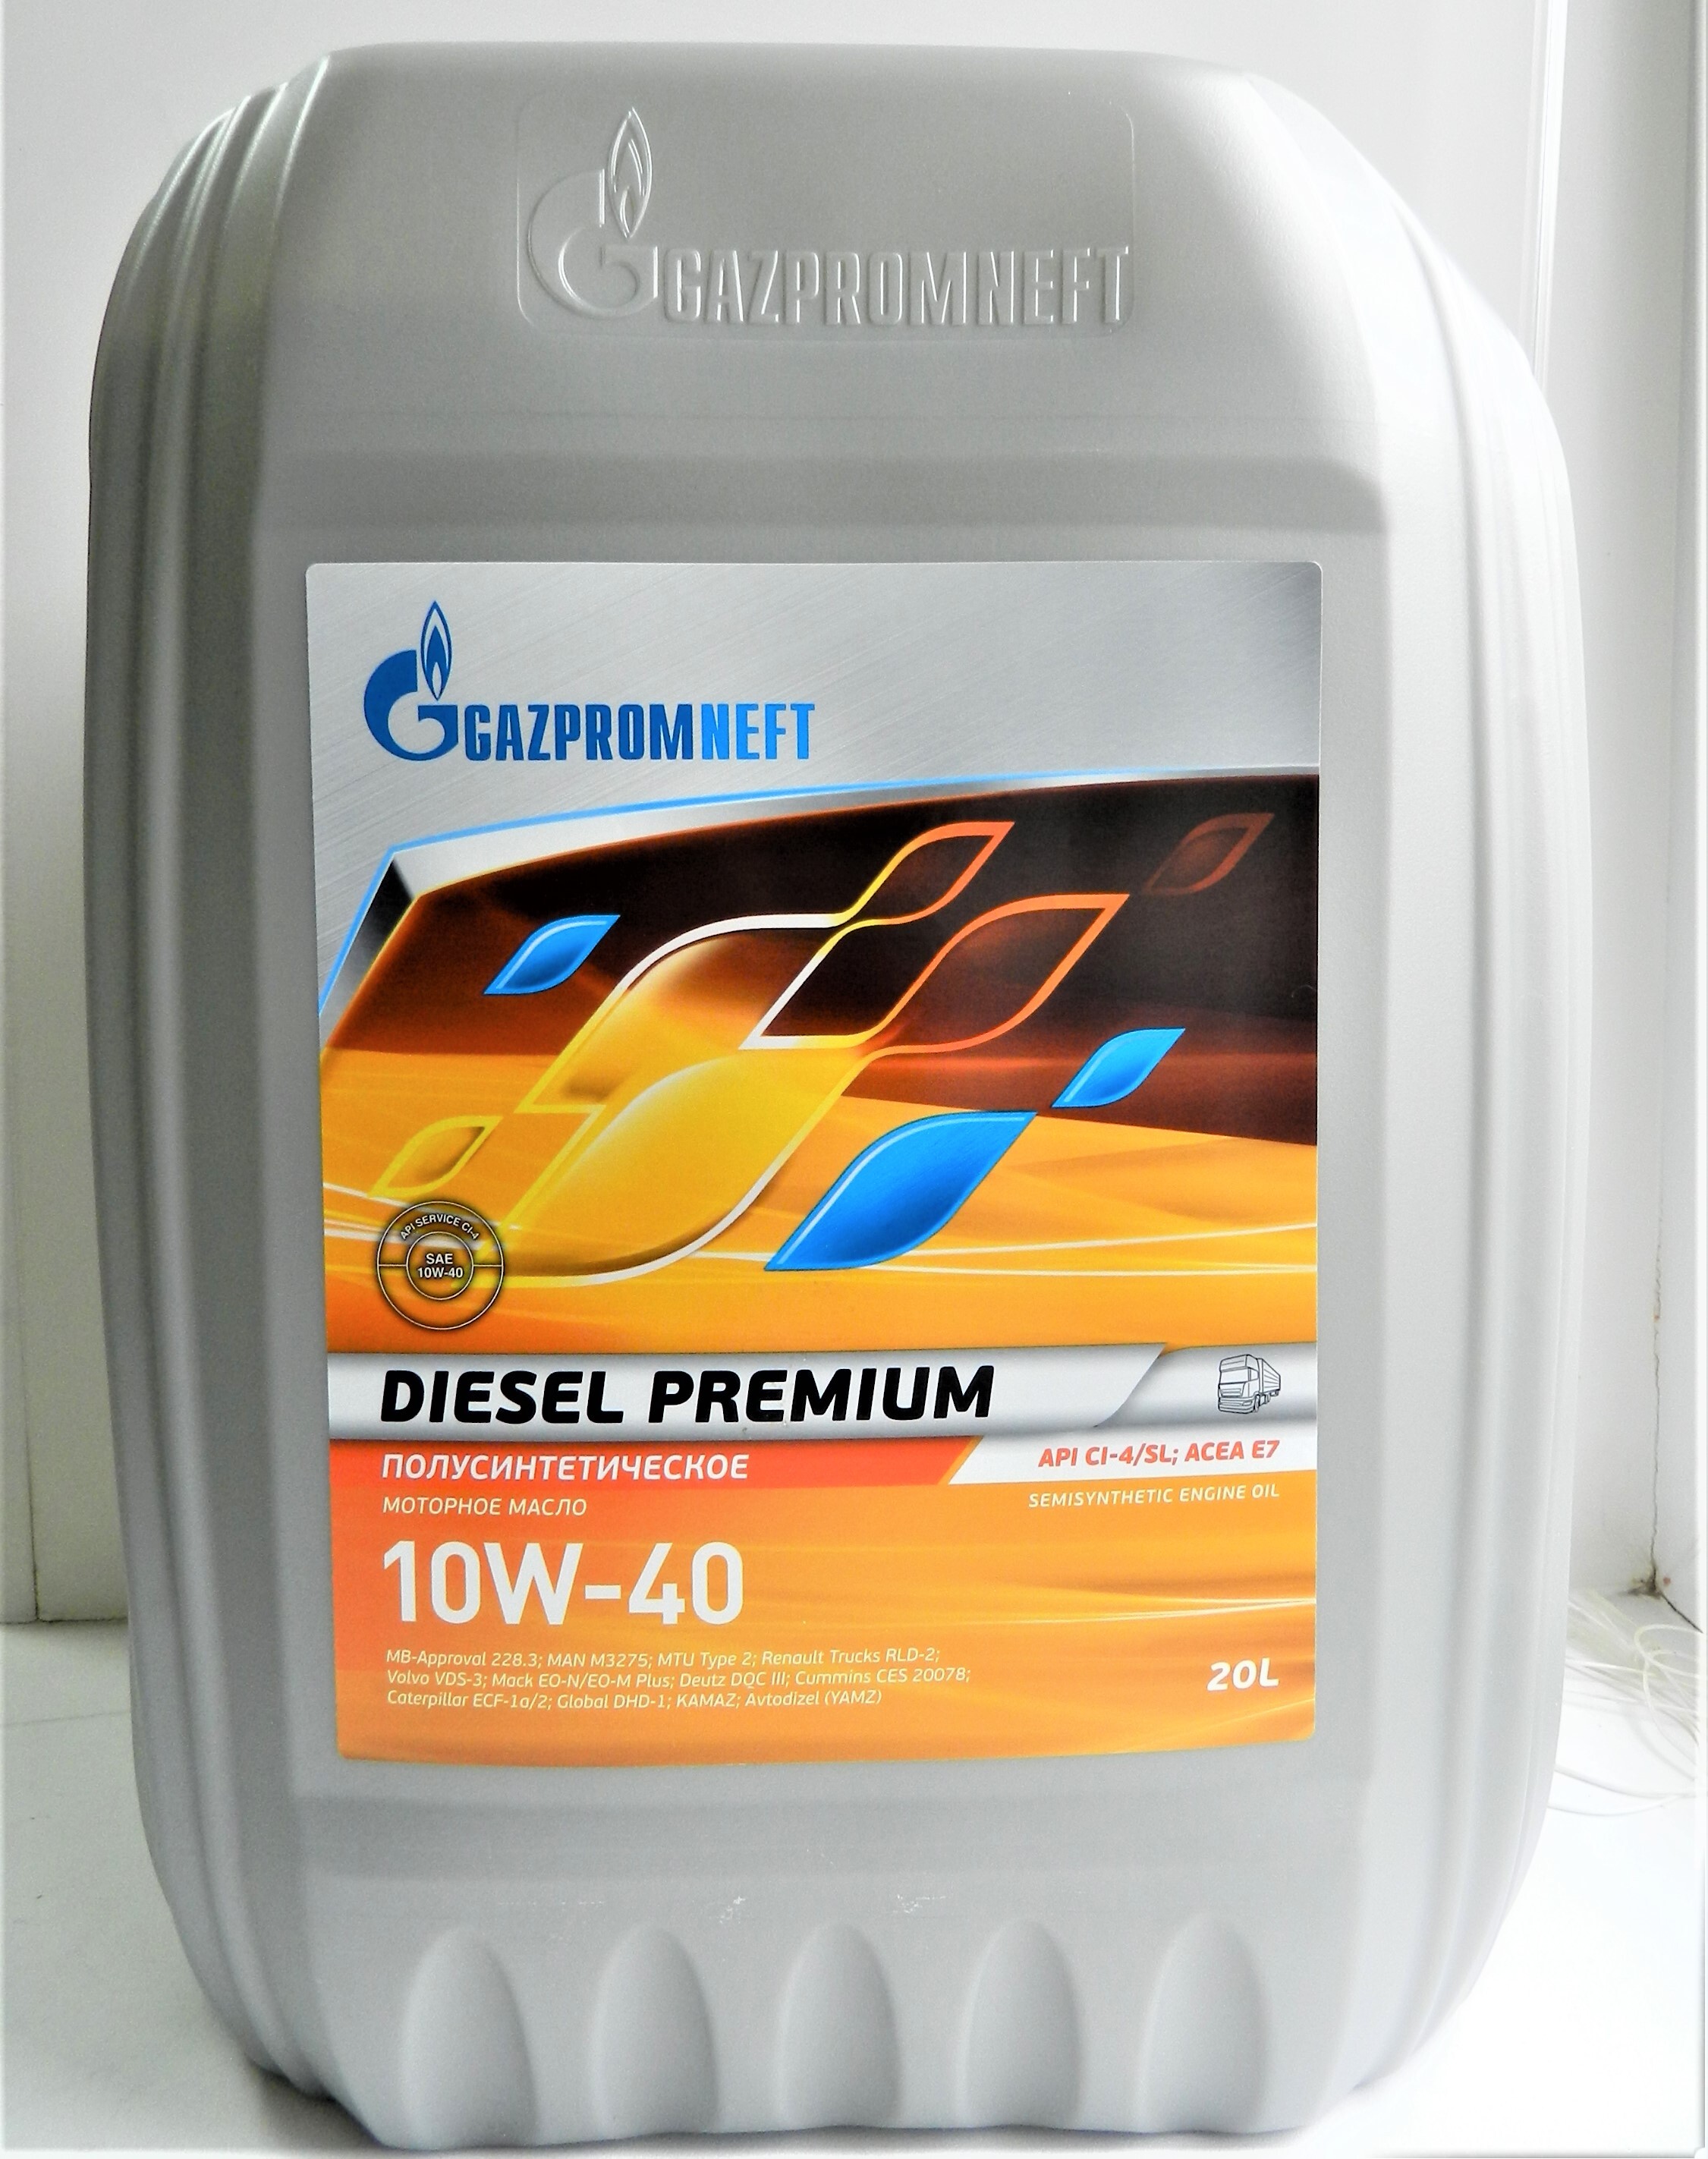 Озон масло полусинтетика моторное. Масло GAZPROMNEFTDIESELPREMIUM 10w40. Gazpromneft дизель премиум 10w 40. Масло Gazpromneft Diesel Premium 10w-40, 20л.